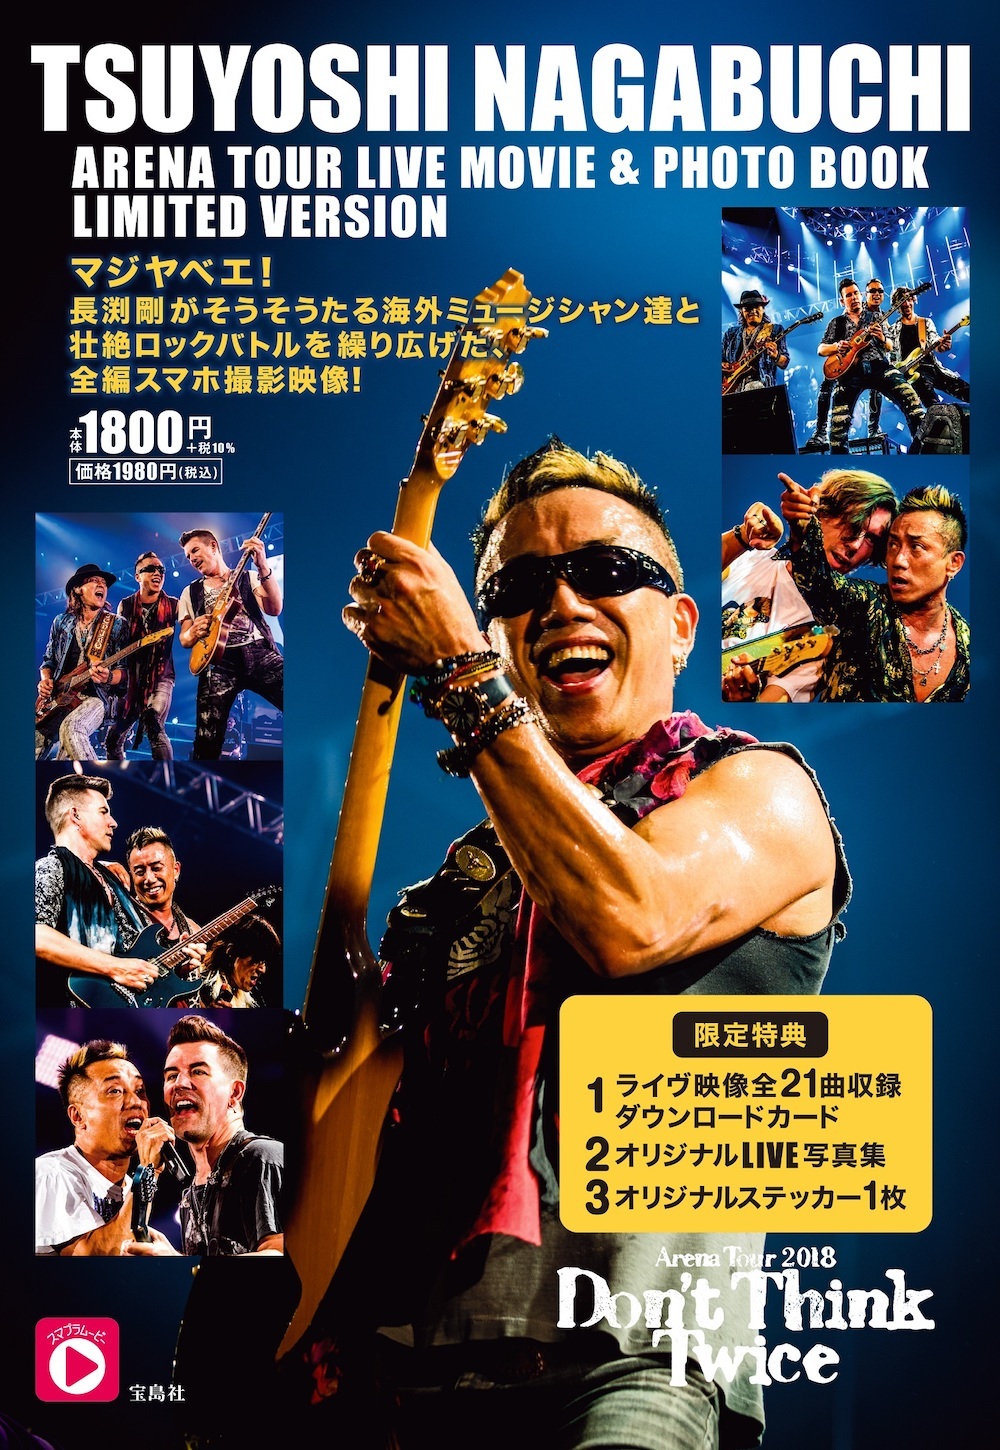 『TSUYOSHI NAGABUCHI ARENA TOUR LIVE MOVIE & PHOTO BOOK』ローソン限定版